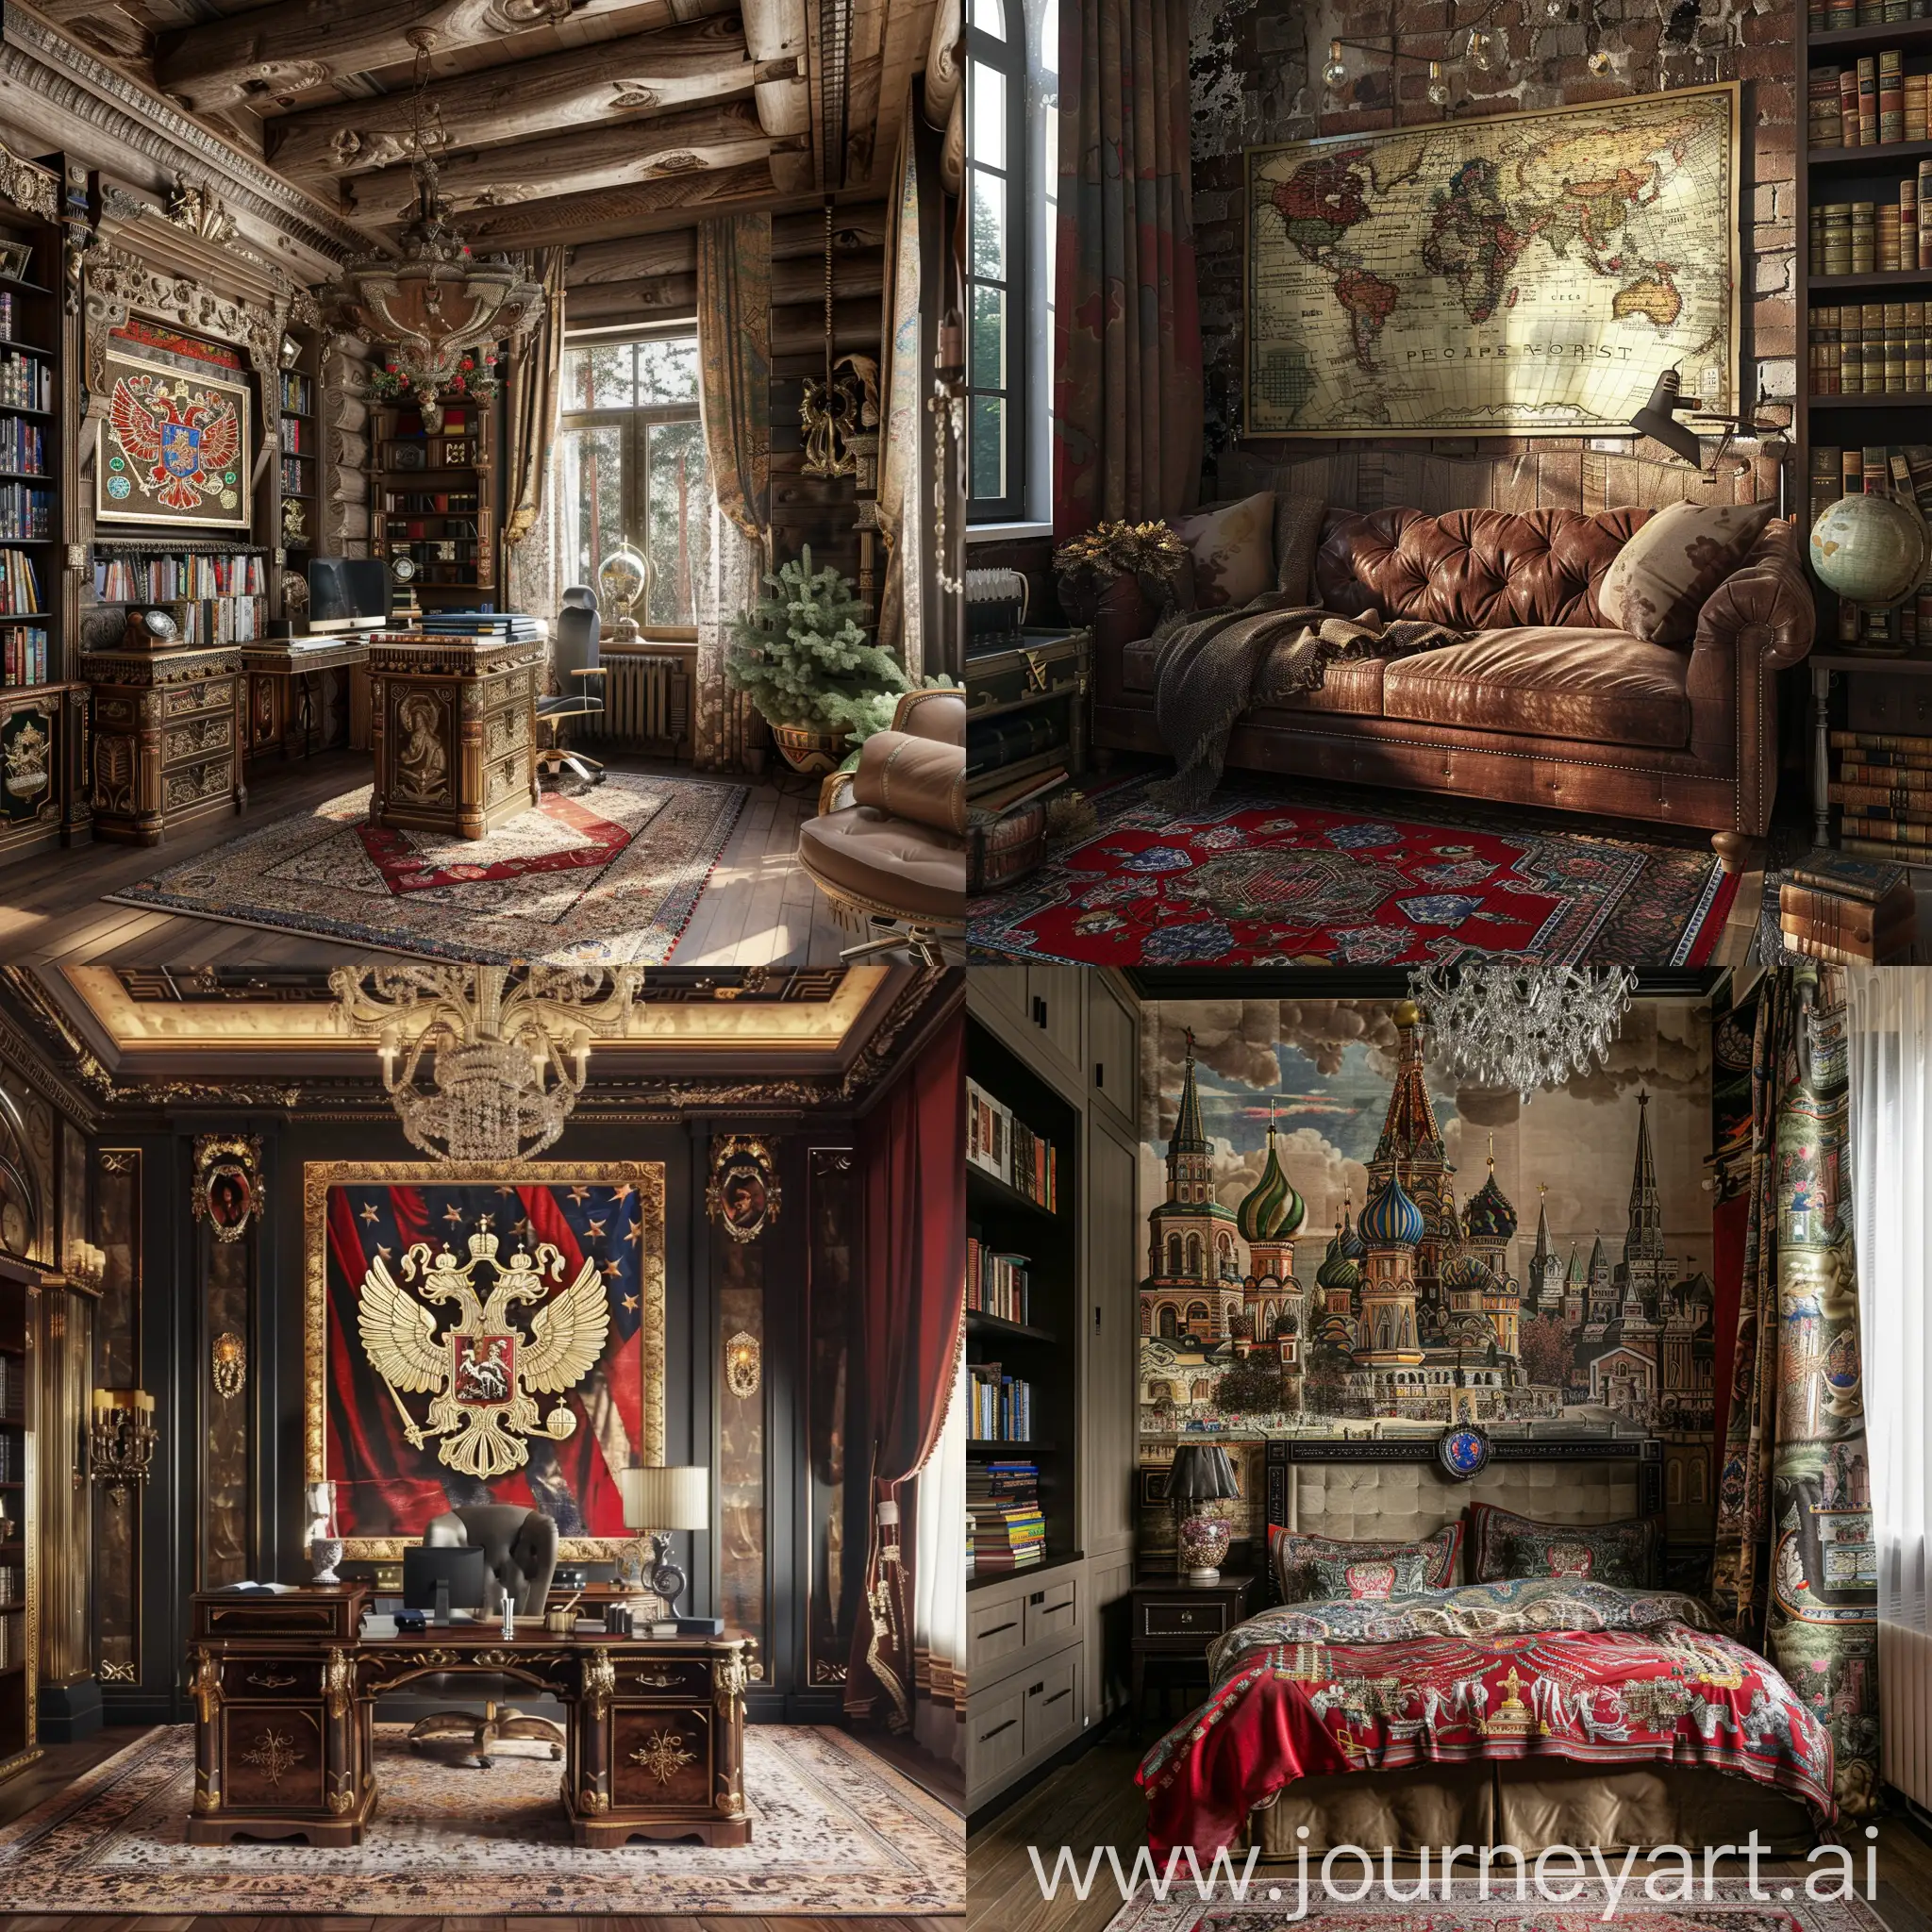 Patriotic-Russian-Room-Interior-with-Traditional-Decor